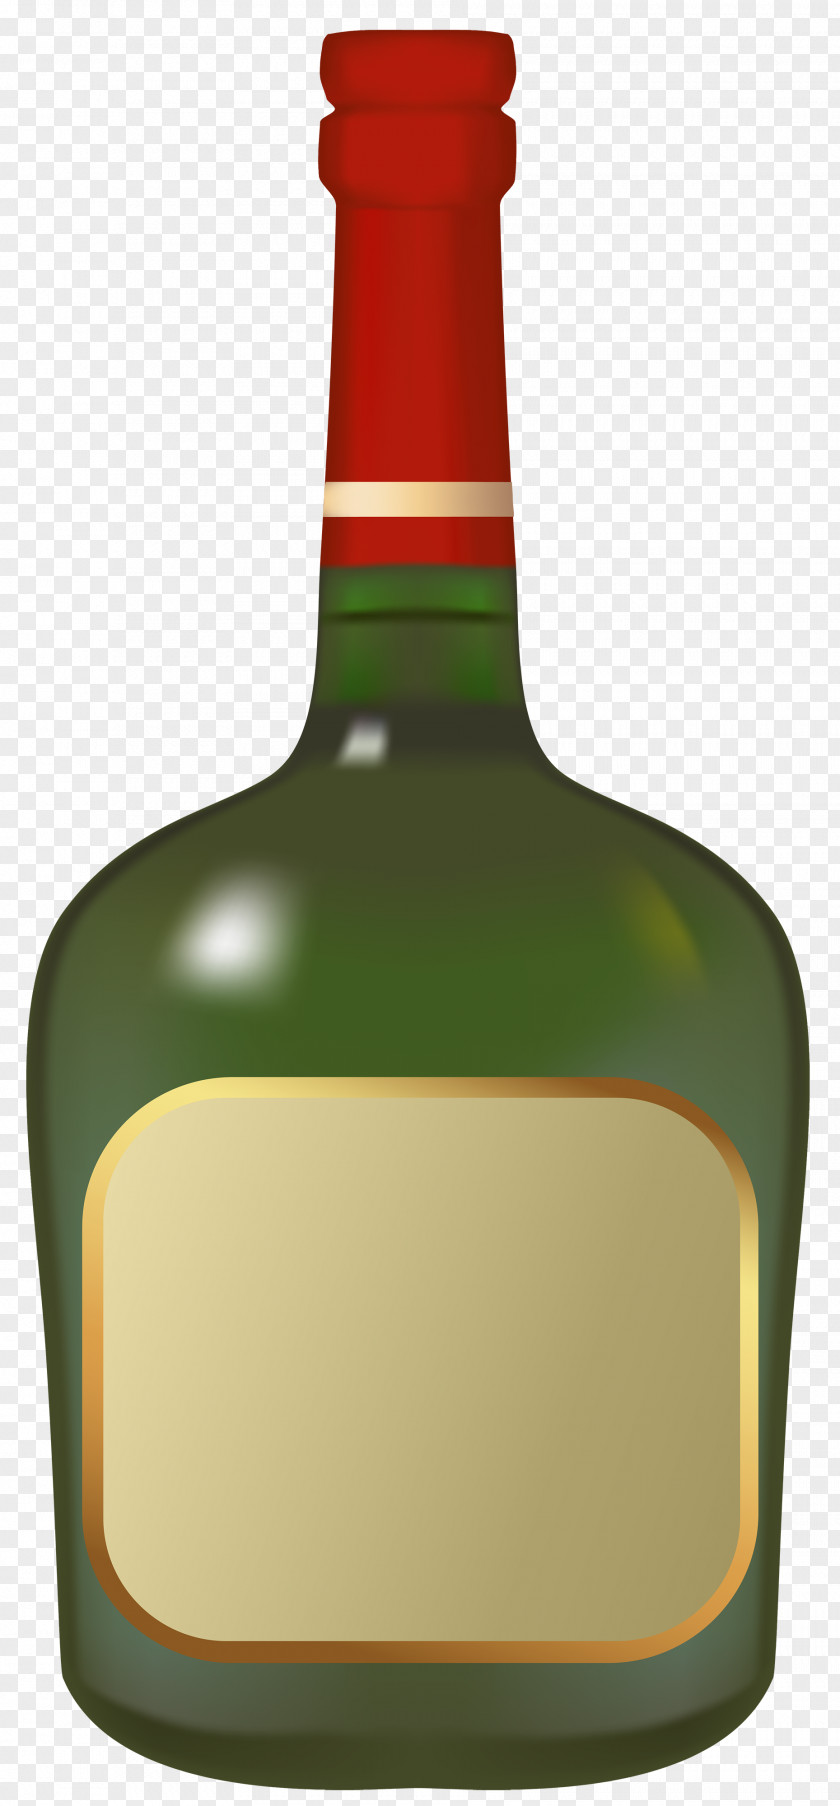 Green Wine Bottle Whiskey Distilled Beverage Beer Fizzy Drinks PNG